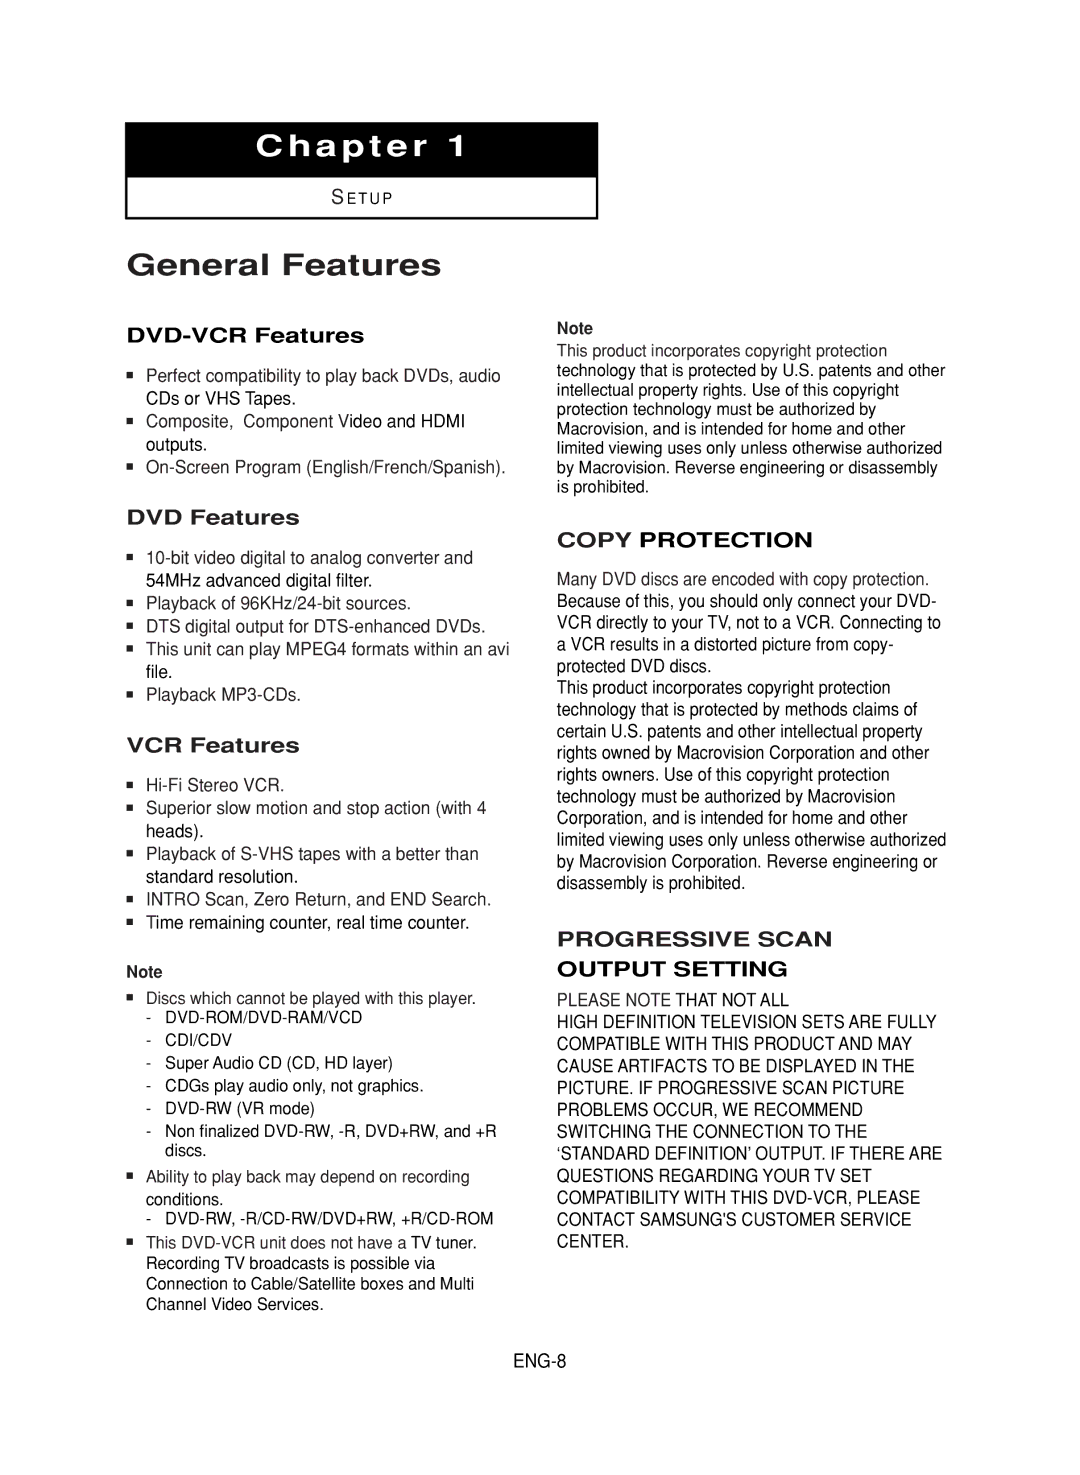 Samsung DVD-V9800 instruction manual General Features, DVD-VCR Features, DVD Features 